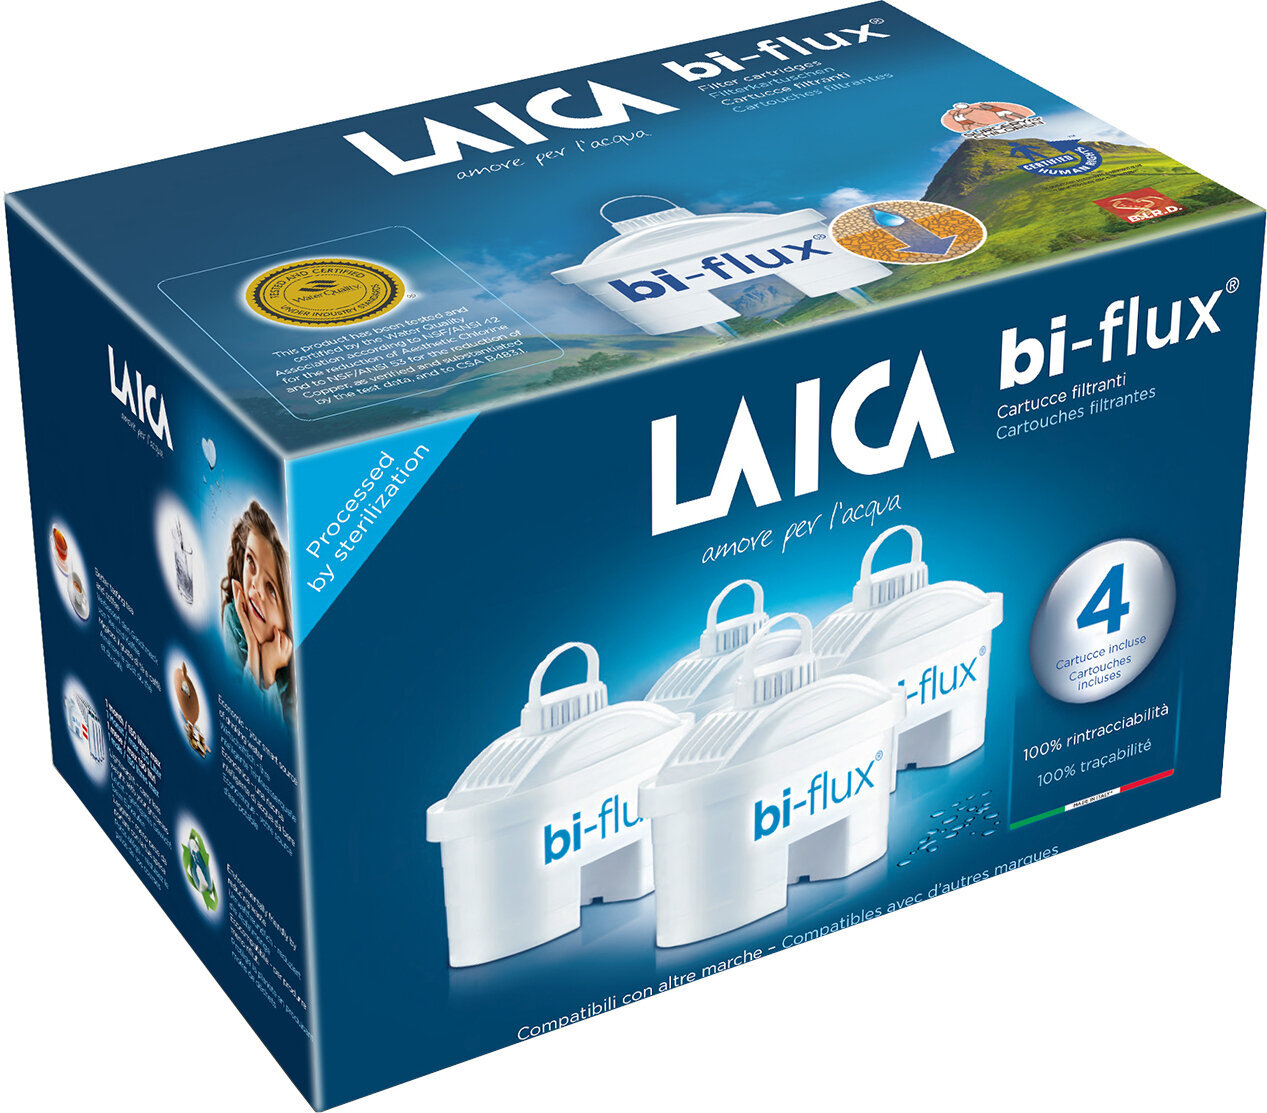 Chaleira com filtro Laica Bi-Flux Cartridge